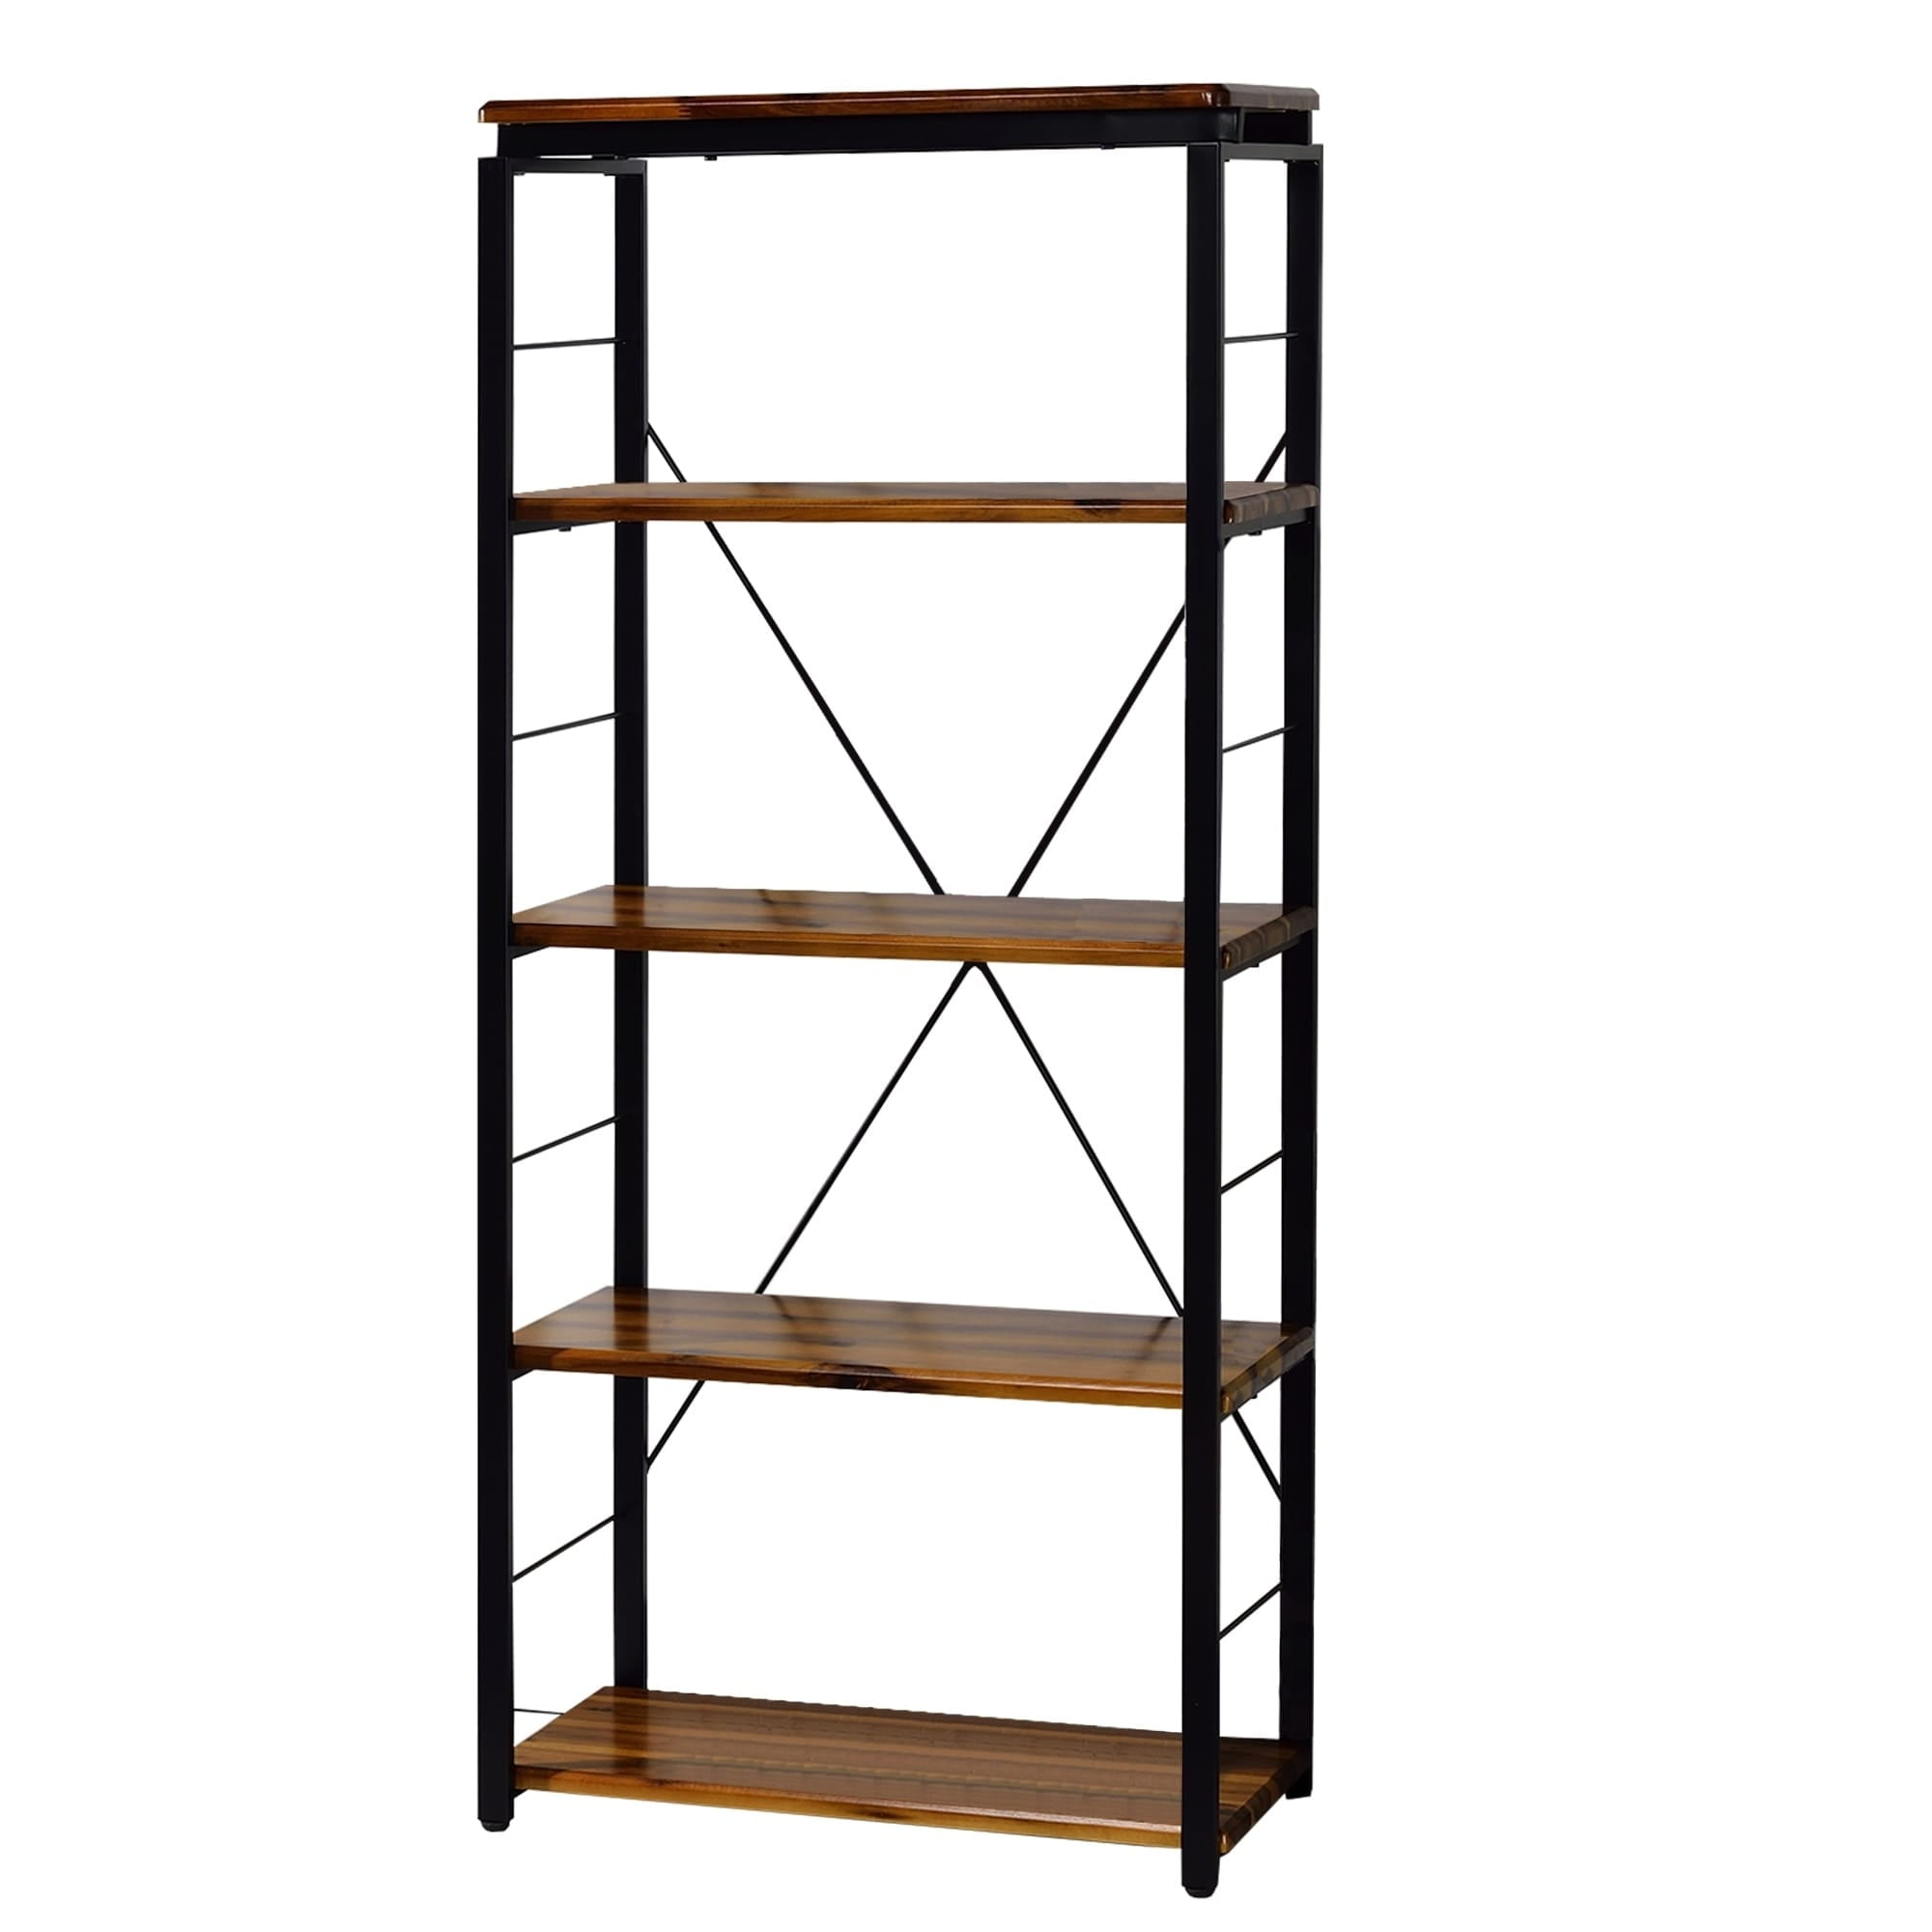 Bm209629 54 X 11 X 24 In. Industrial Bookshelf With 4 Shelves & Open Metal Frame, Brown & Black